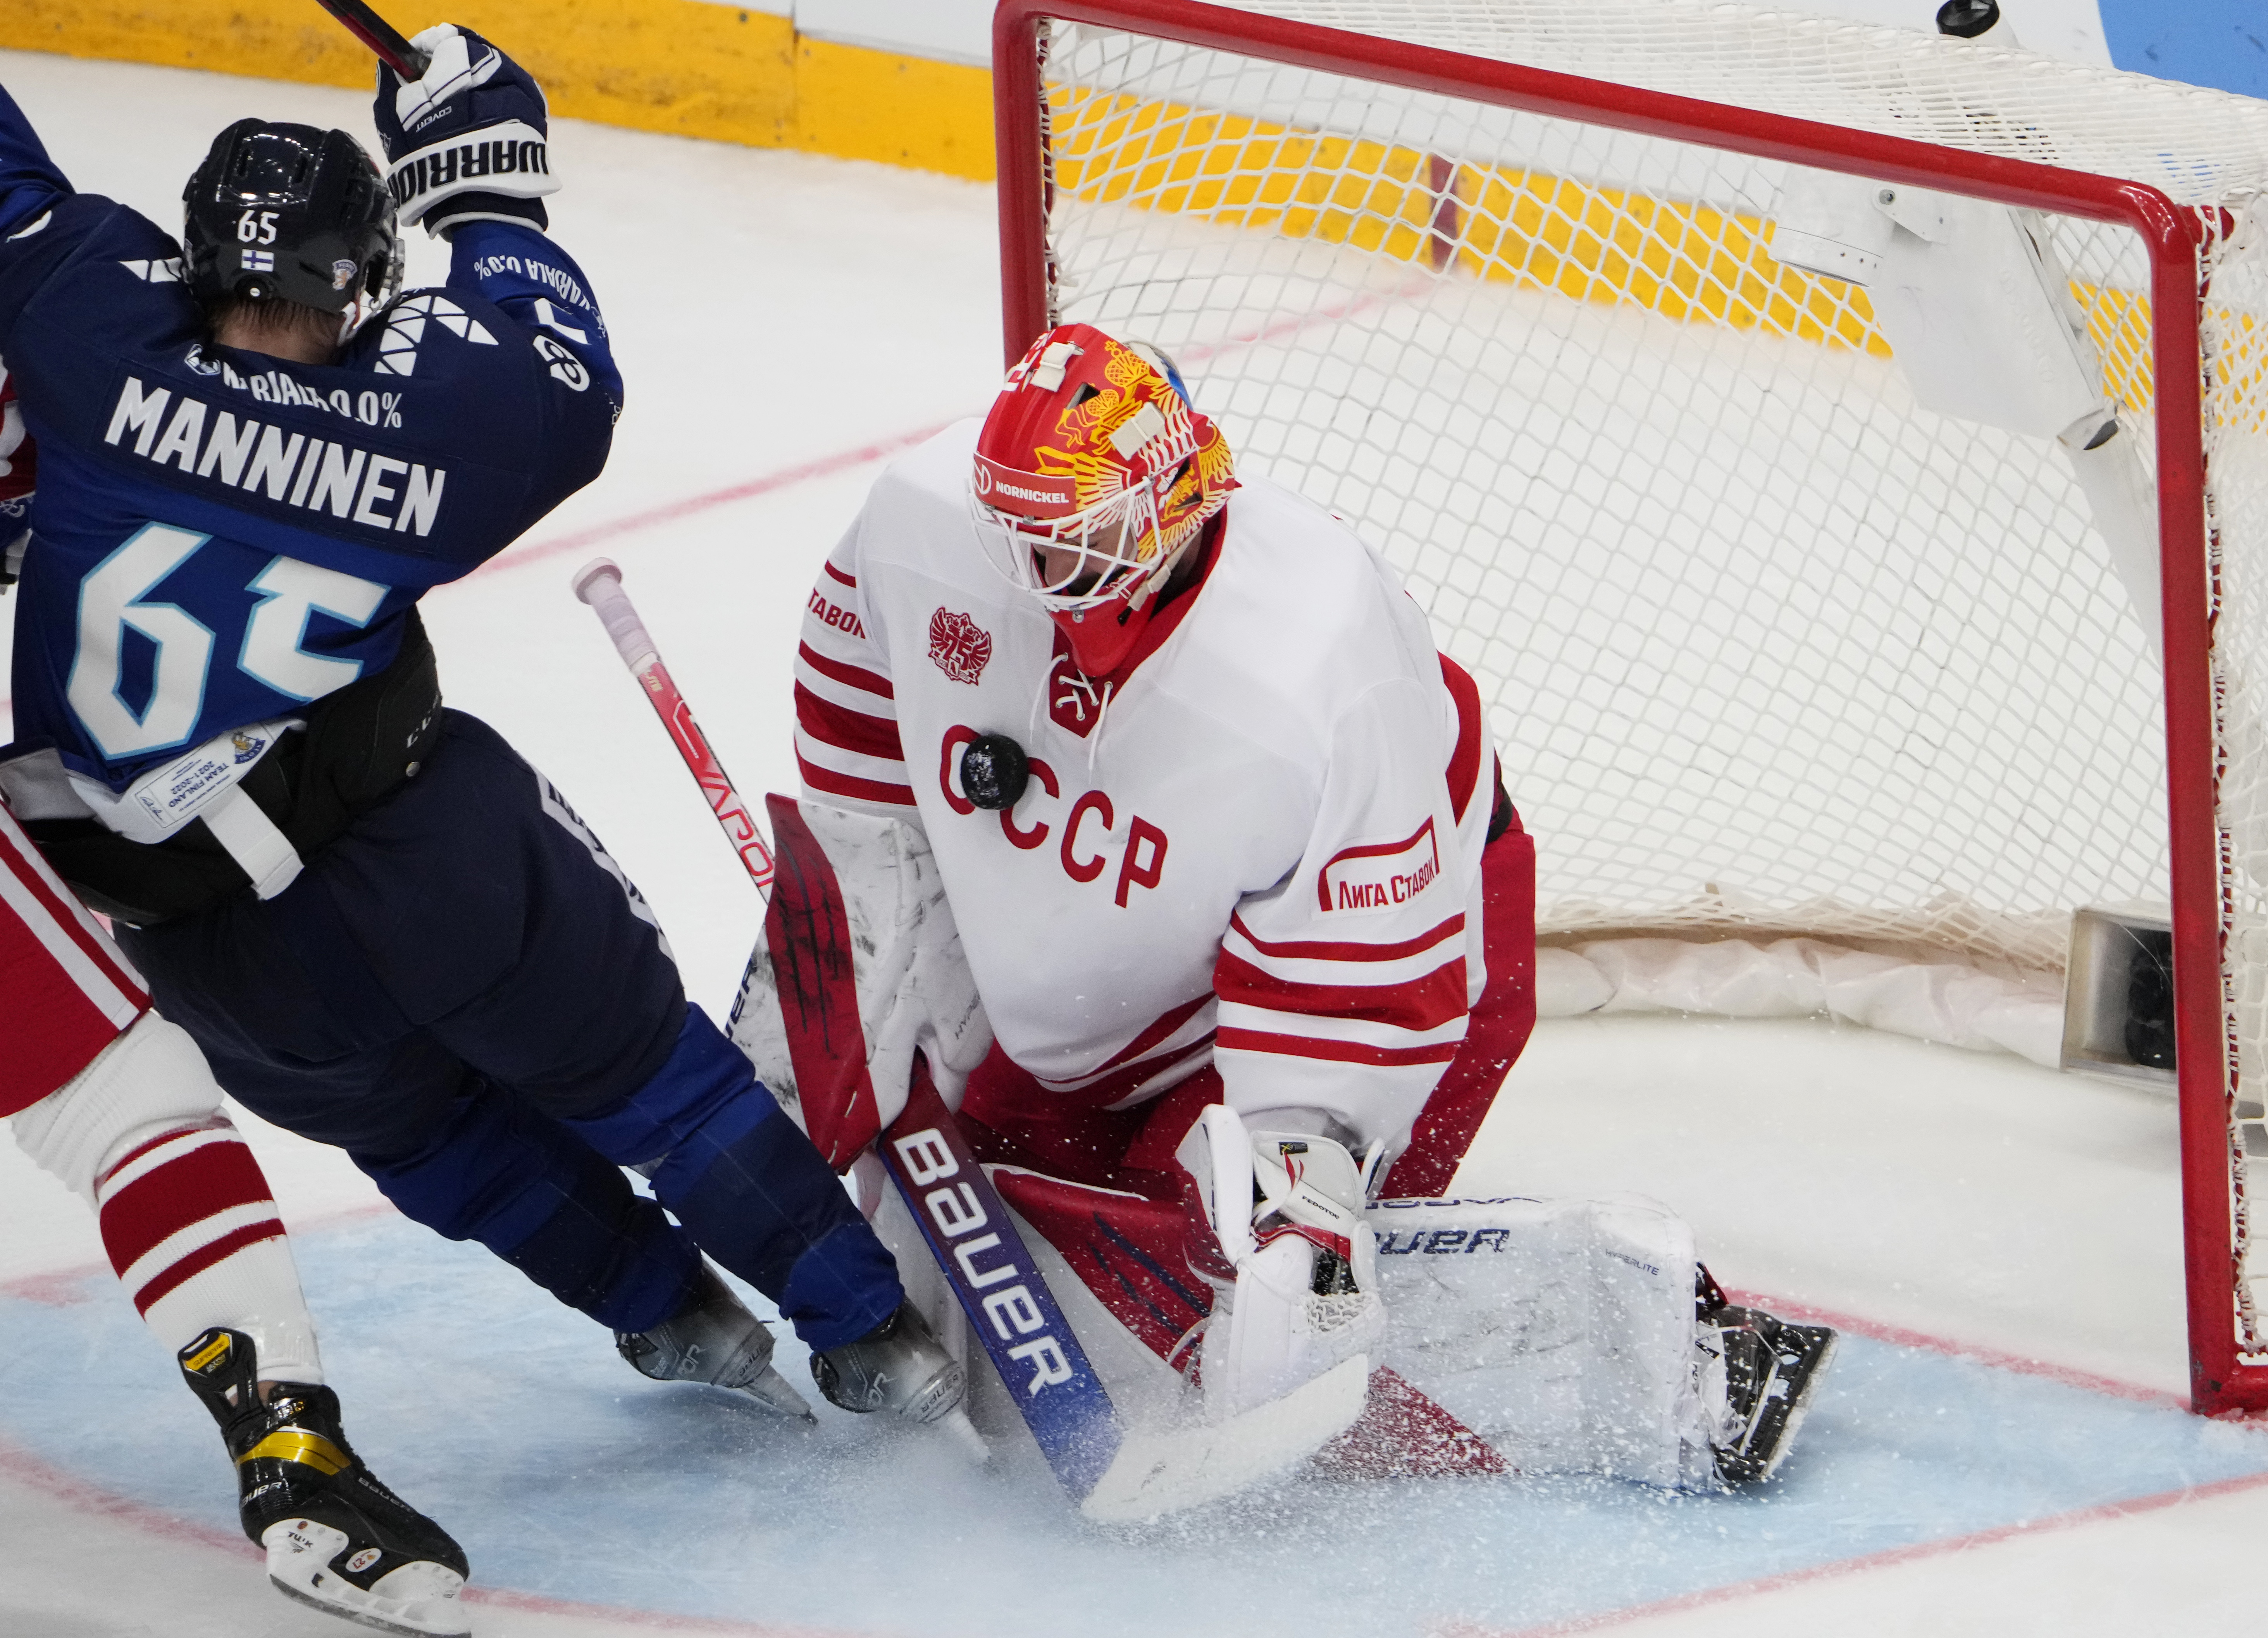 Russian Ice Hockey Team's USSR Jerseys Raise Eyebrows - Bloomberg